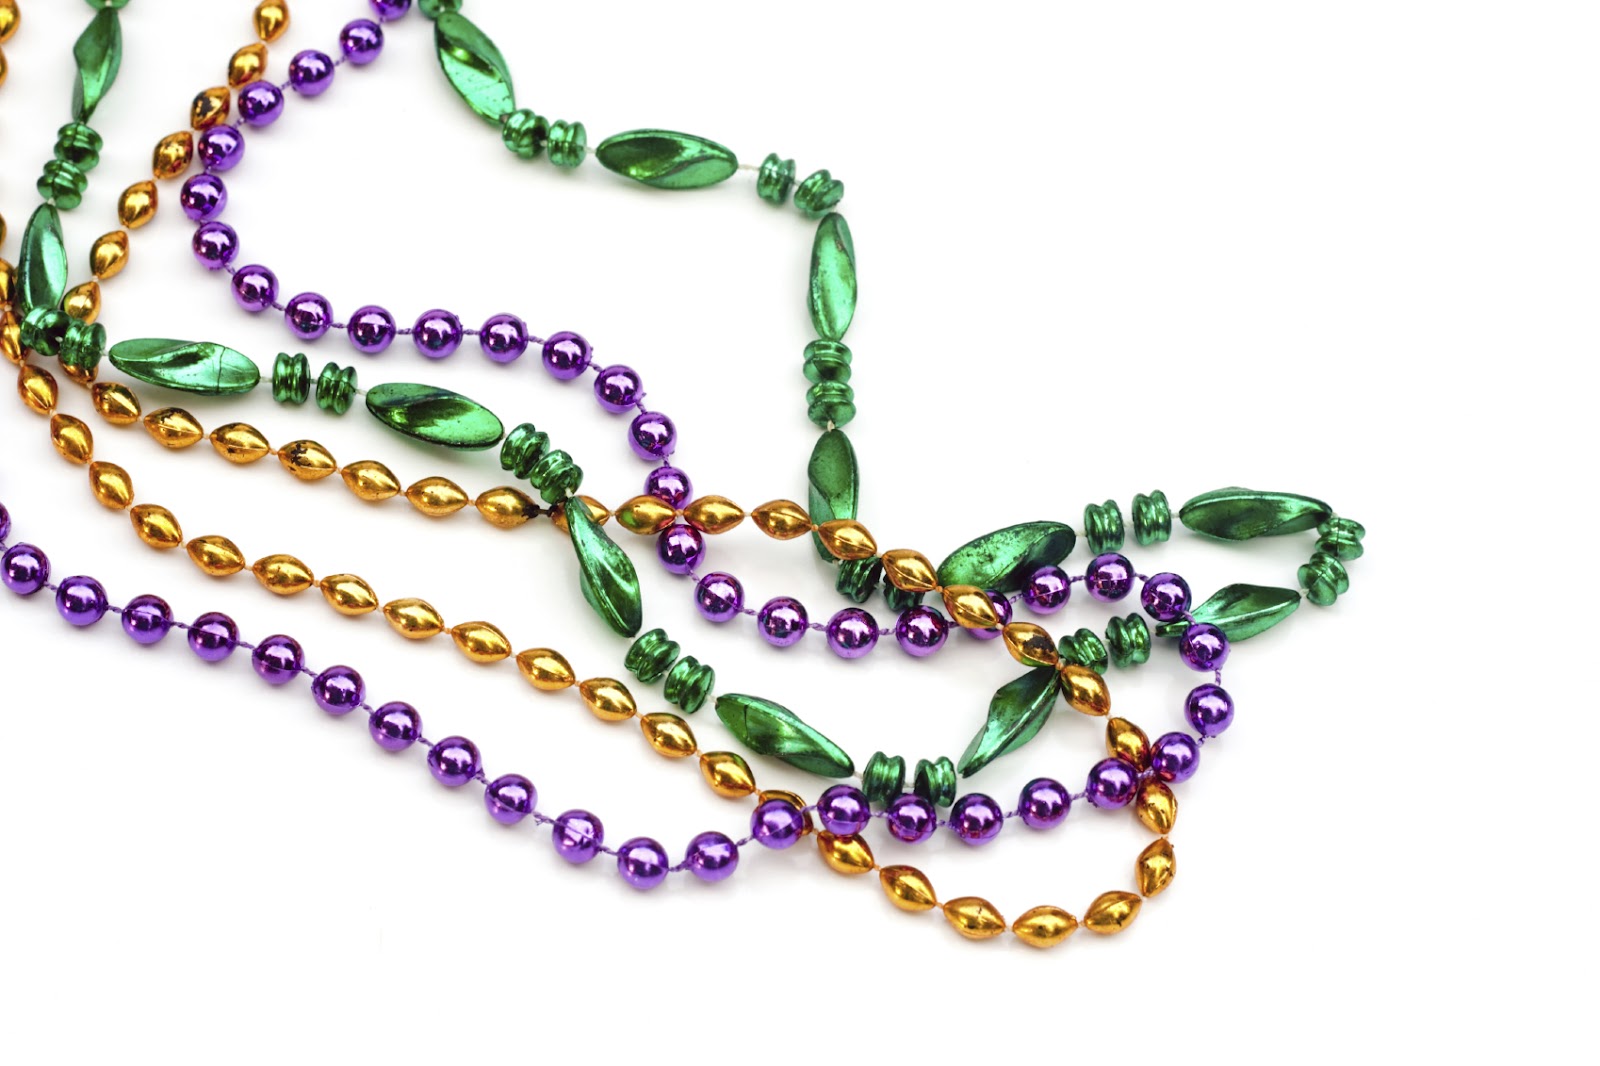 Mardi Gras Beads Clip Art